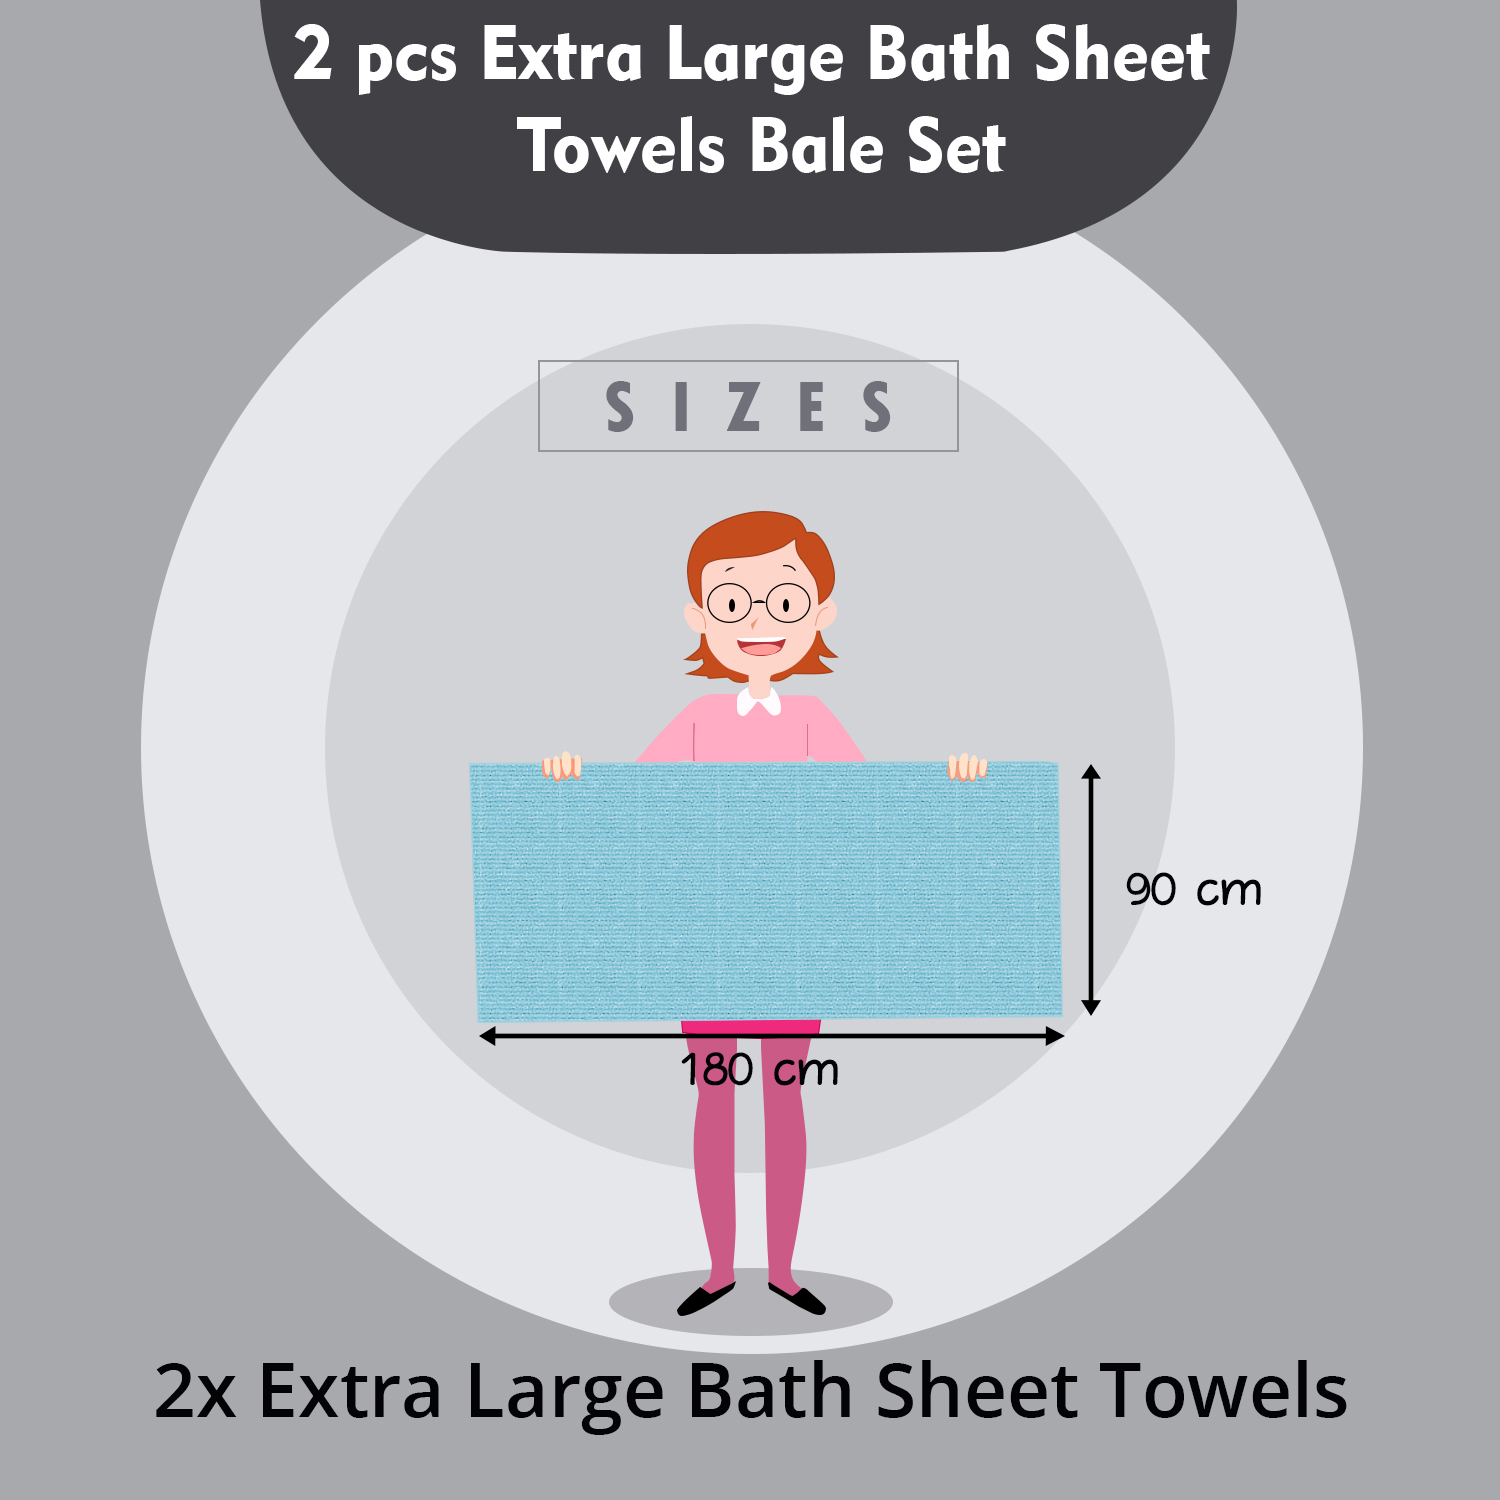 Bale Set 2pcs Dark Navy Premium Plain Extra Large Bath Sheet Towel